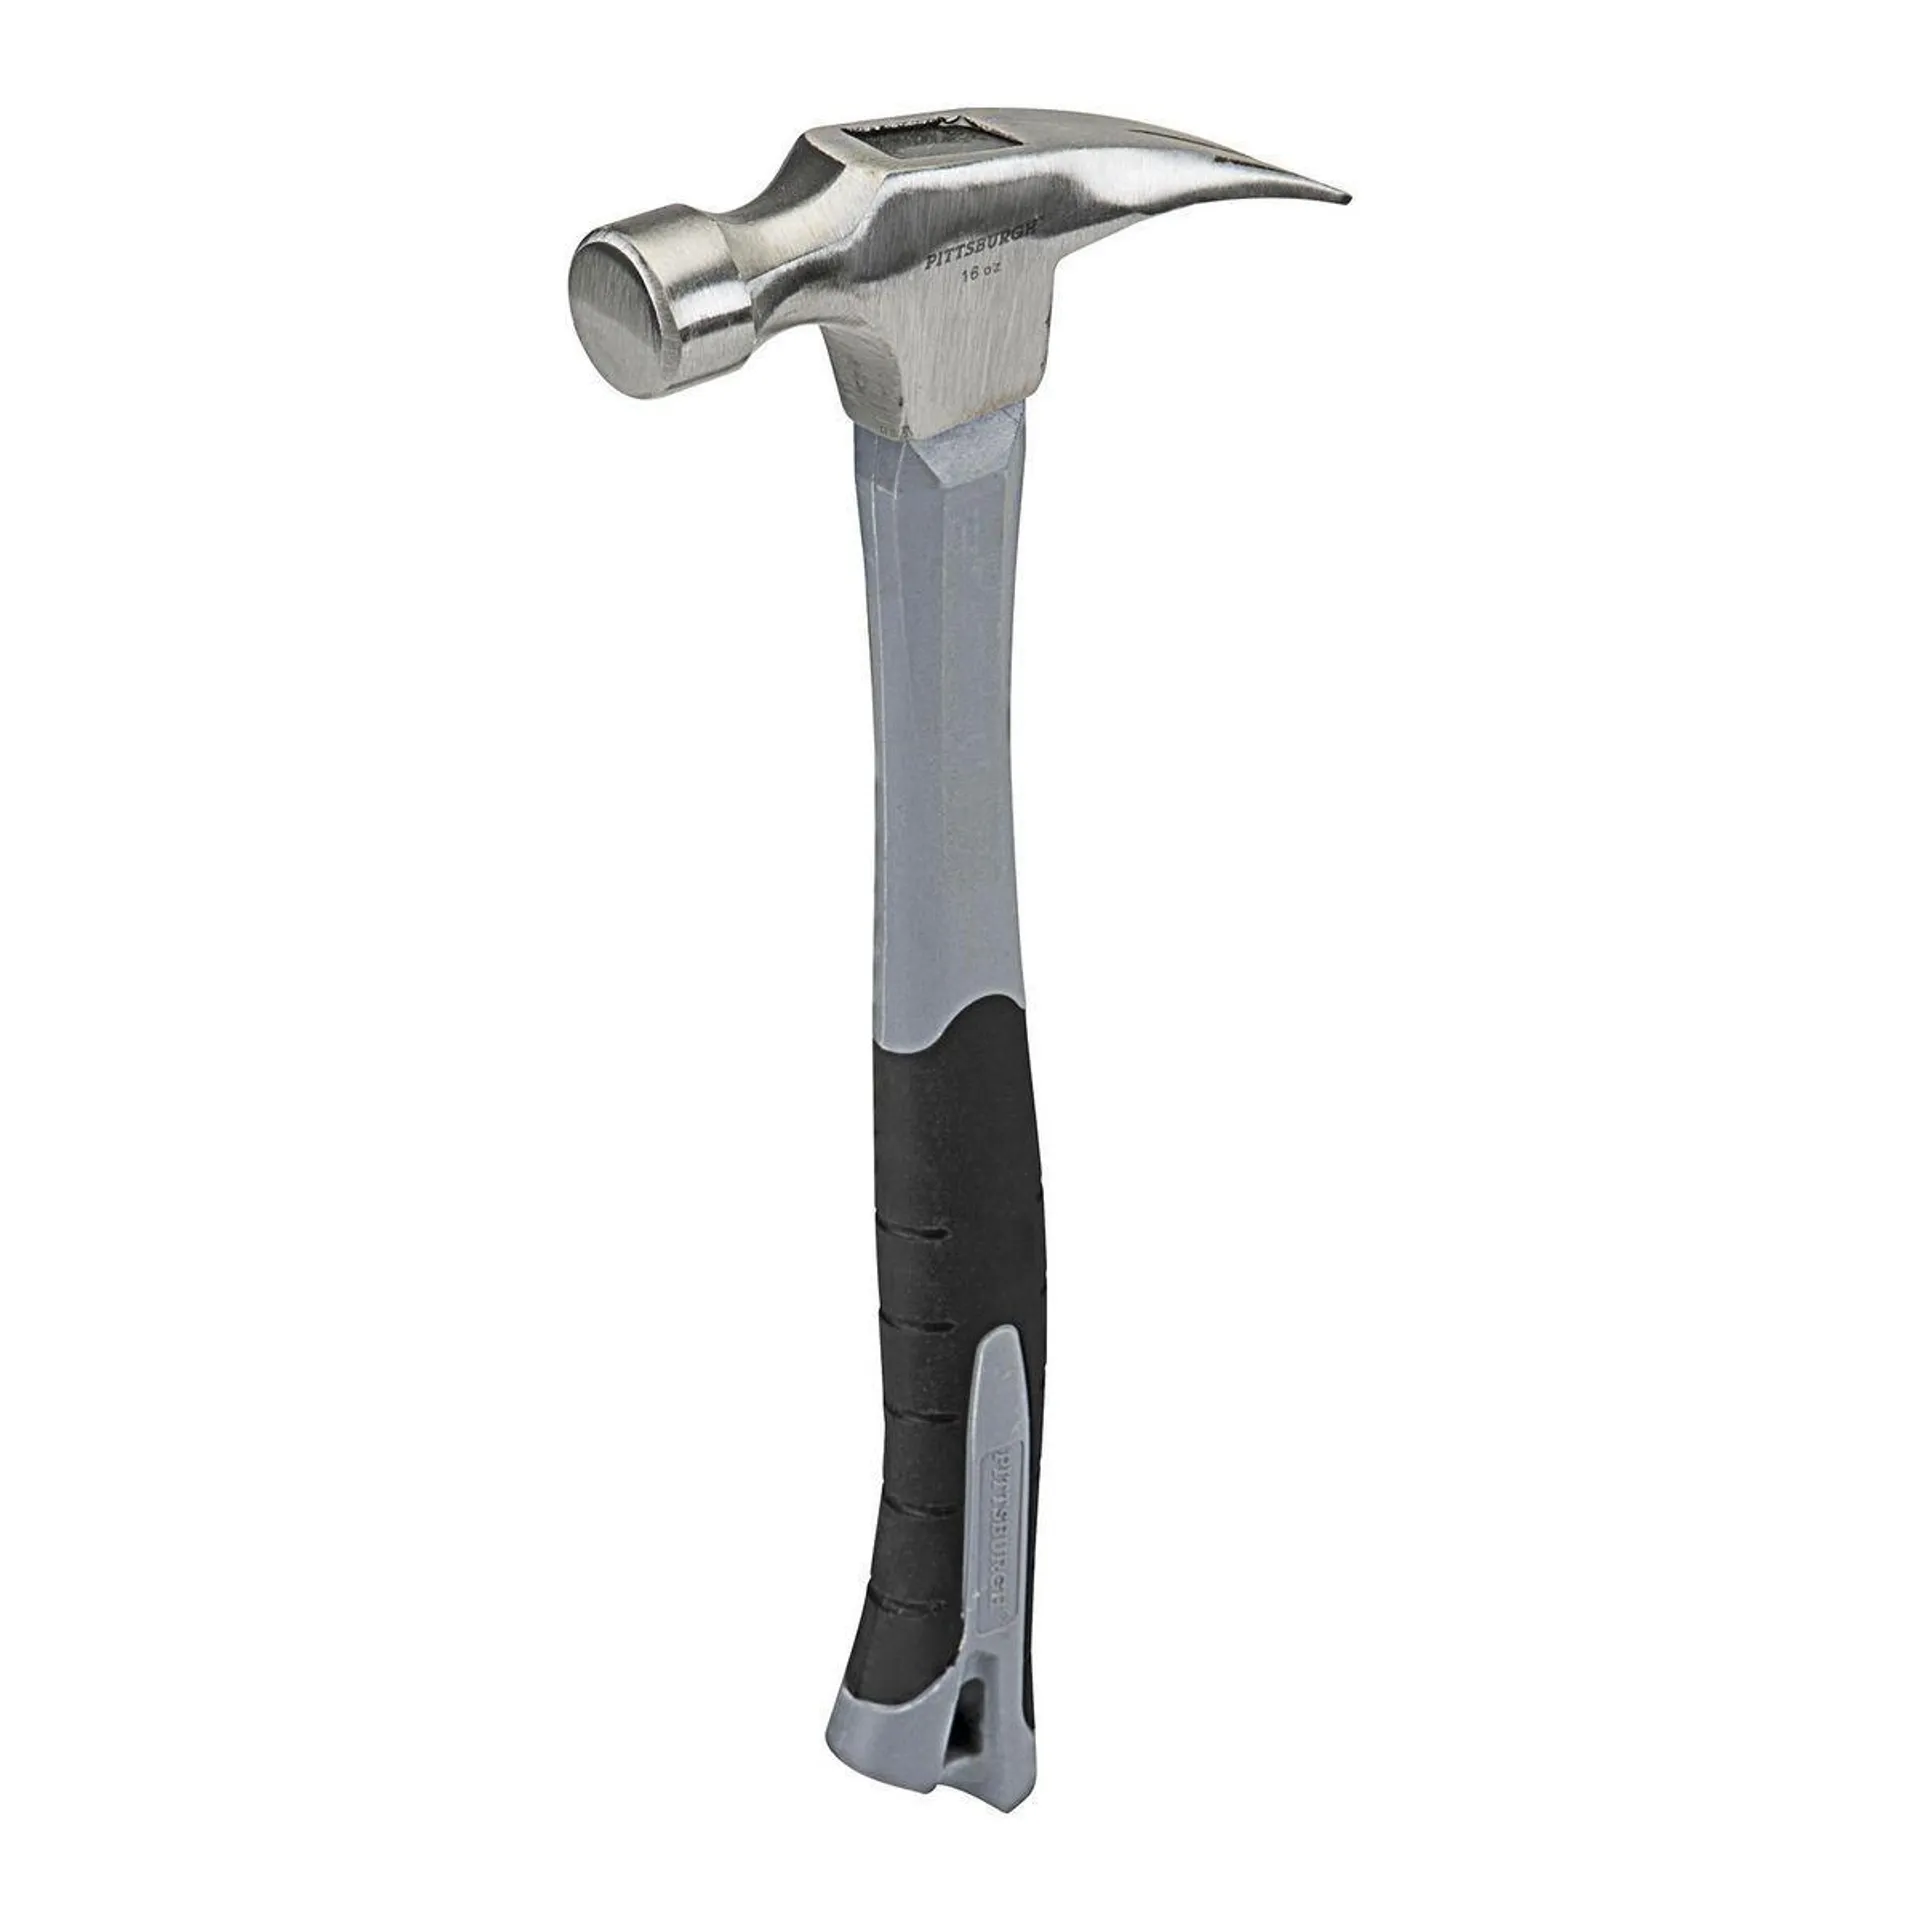 16 oz. Fiberglass Rip Hammer